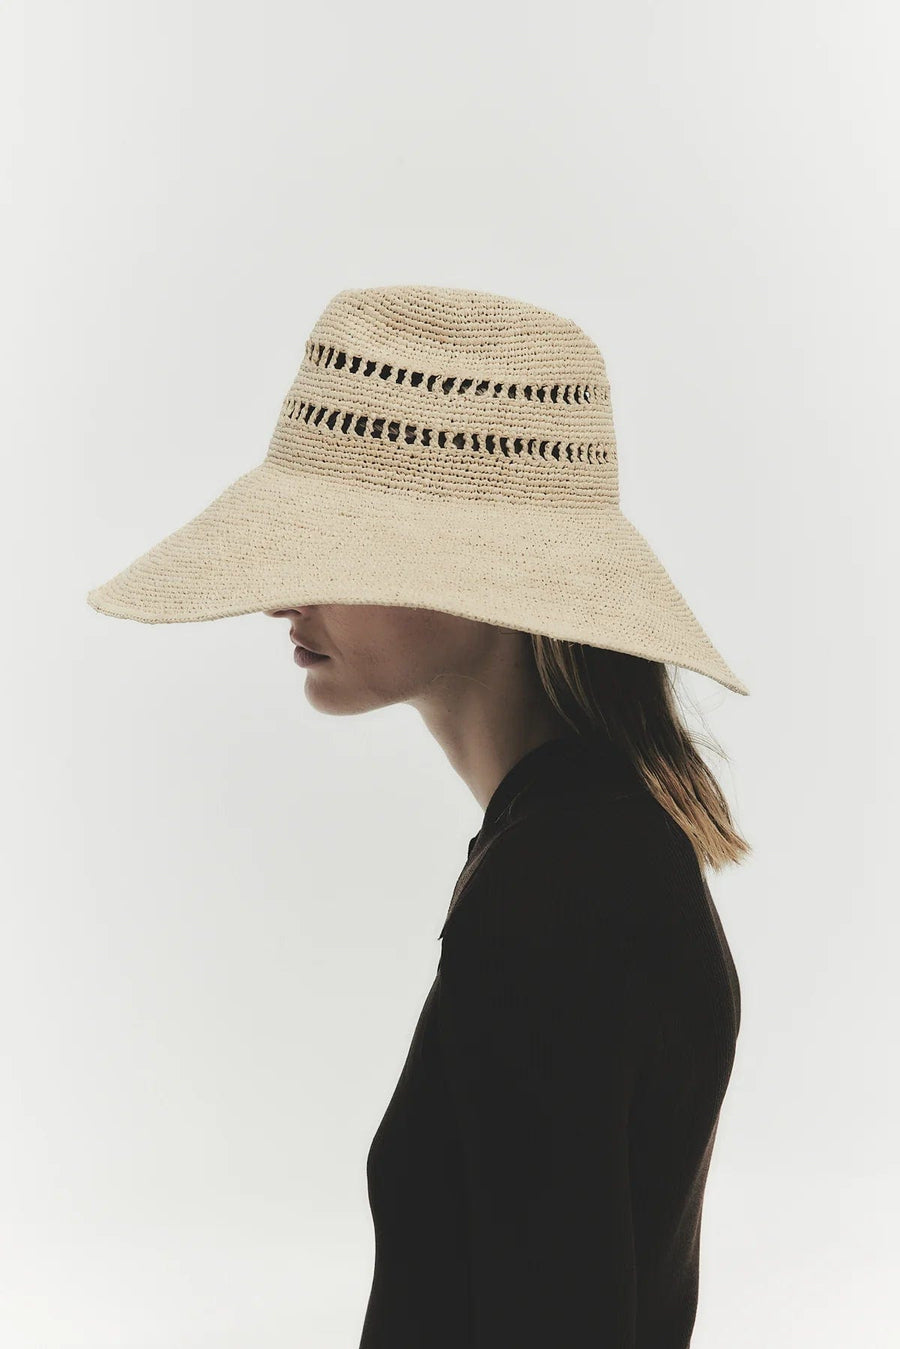 Janessa Leone Hats Harlow Hat